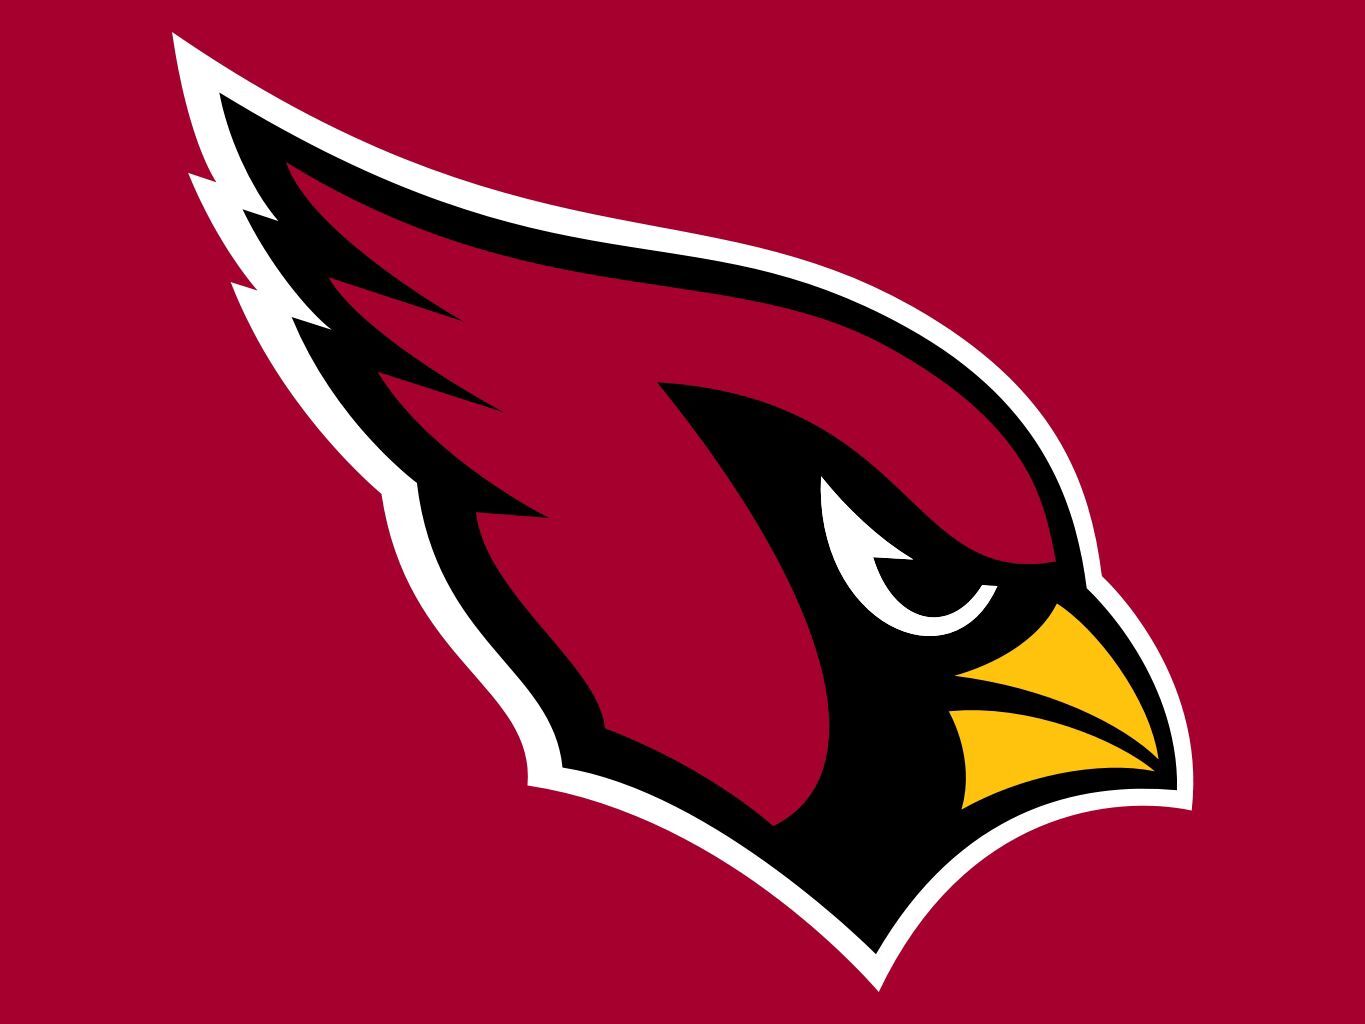 Arizona Cardinals, American Football Wiki